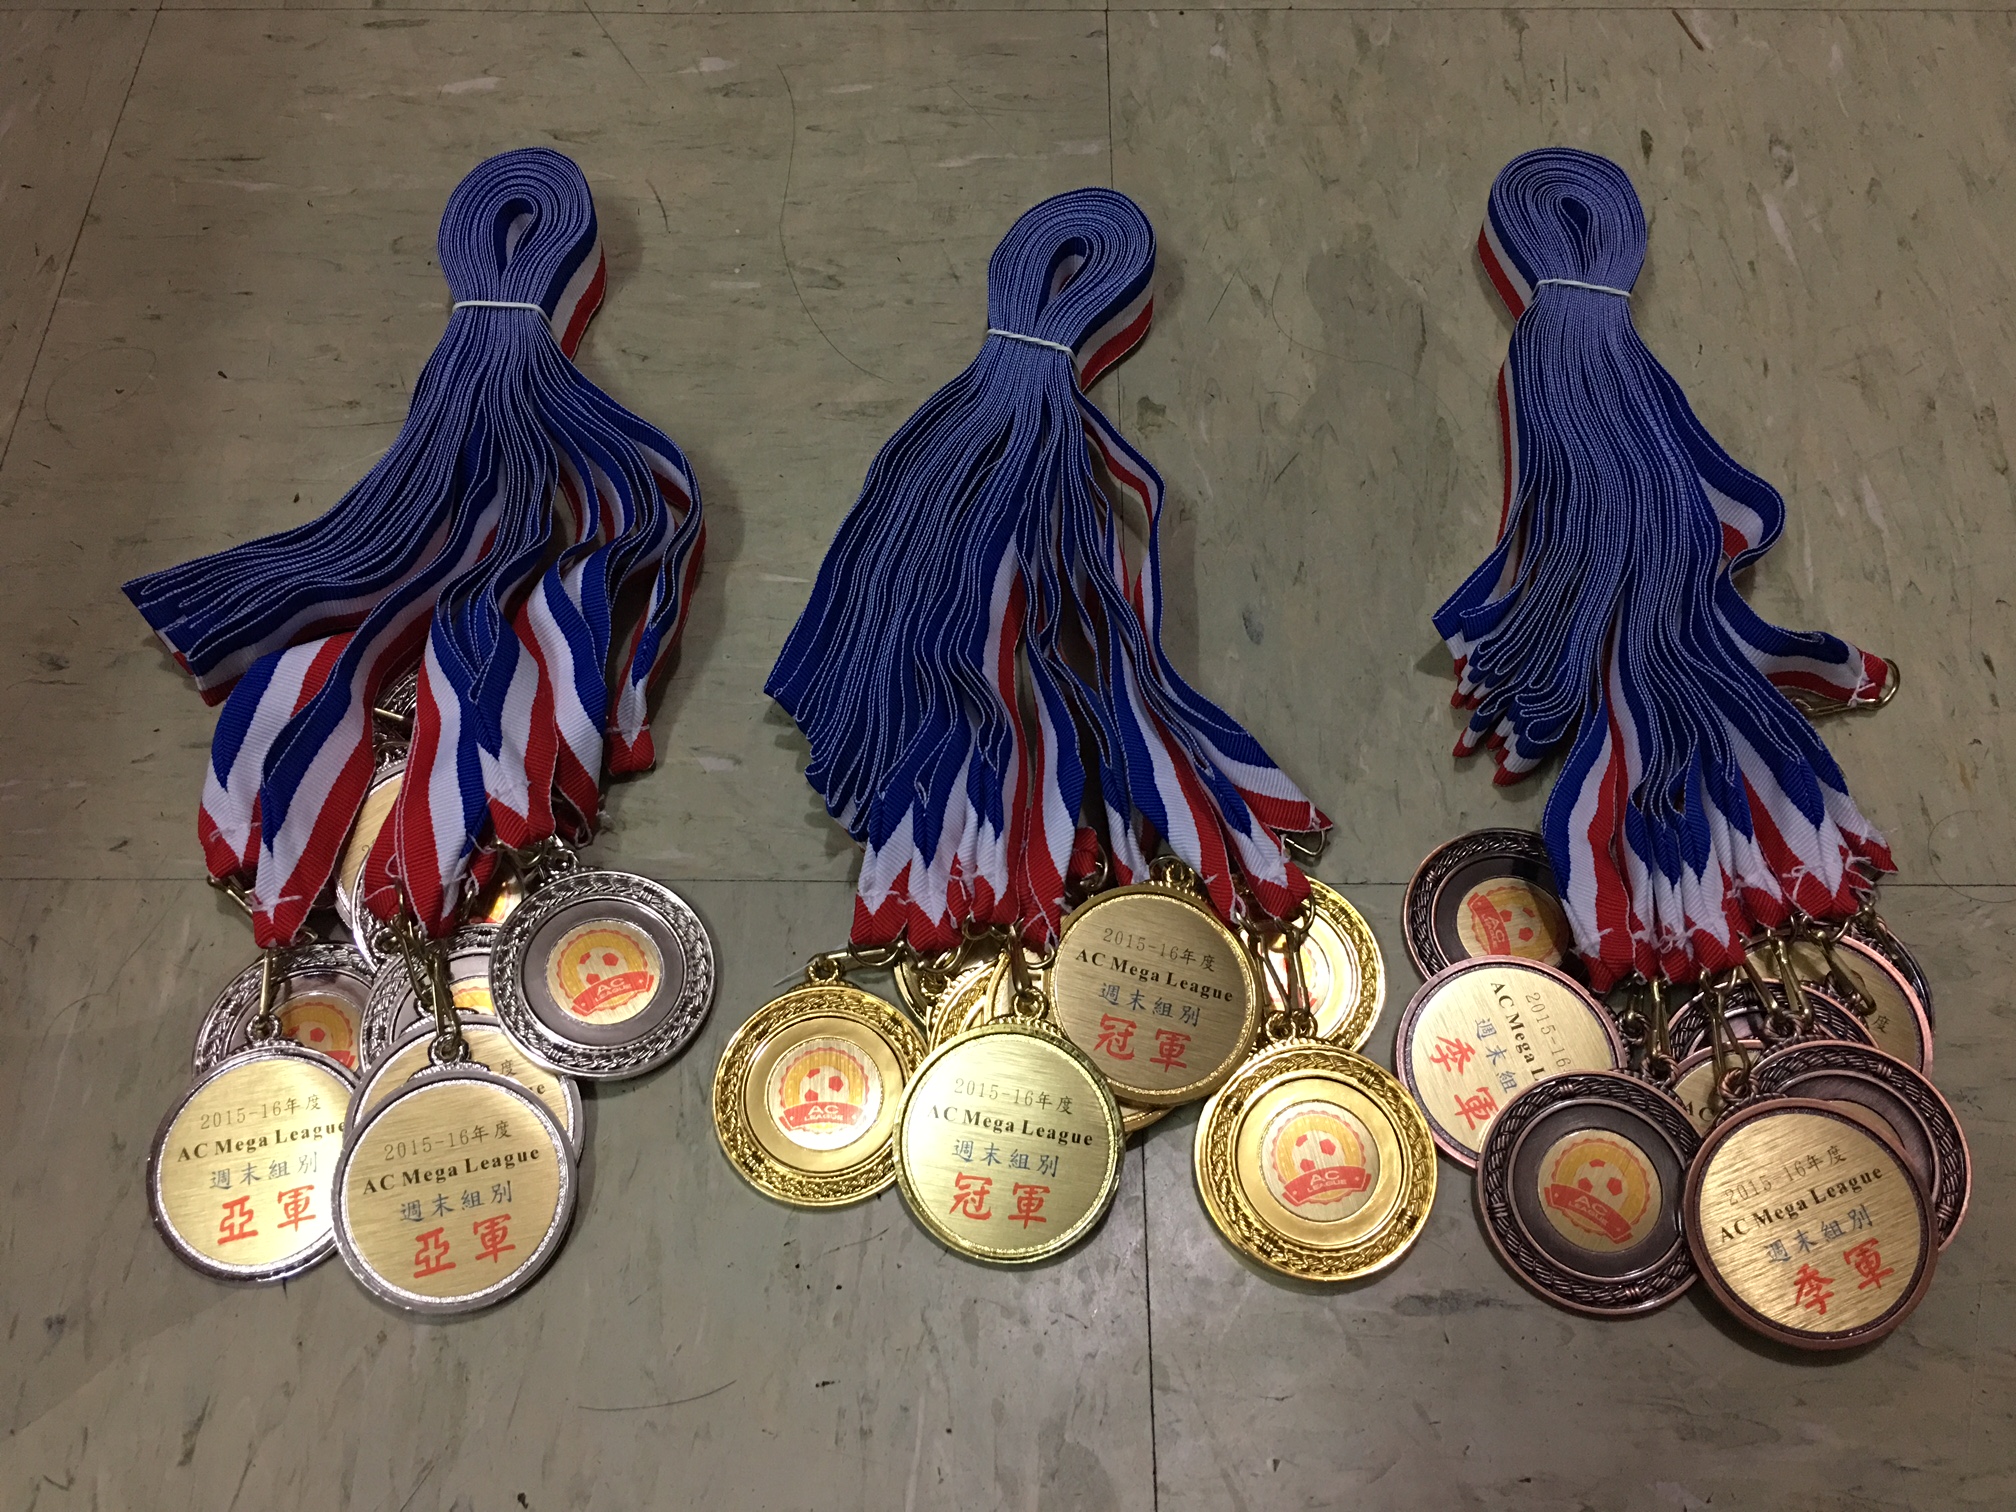 AC mega league 2015-16 weekend medals